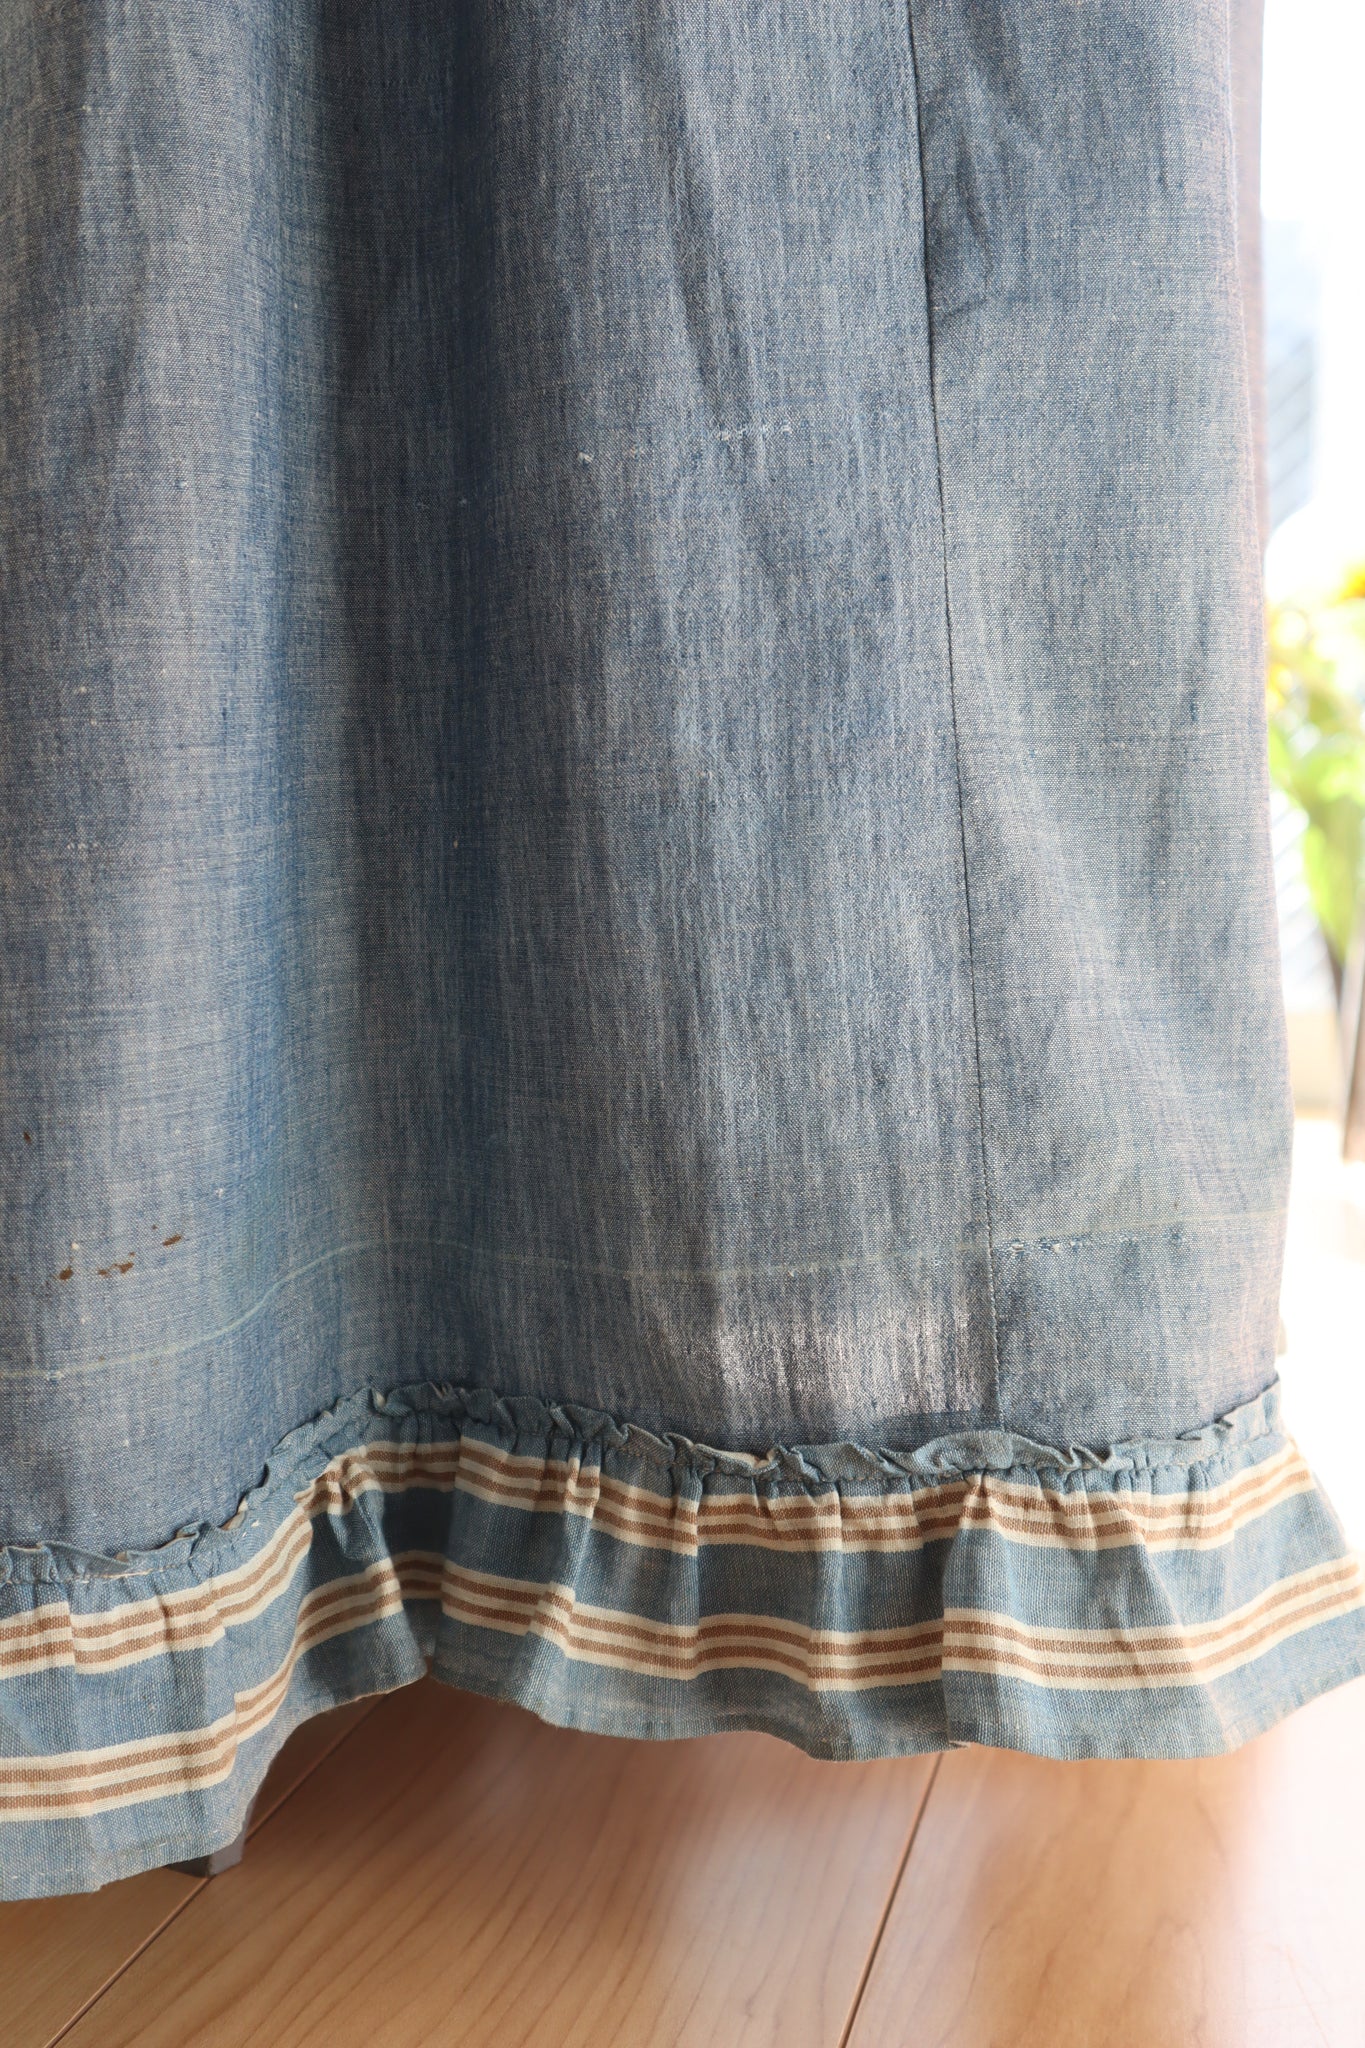 1890s Cotton Chambray Skirt